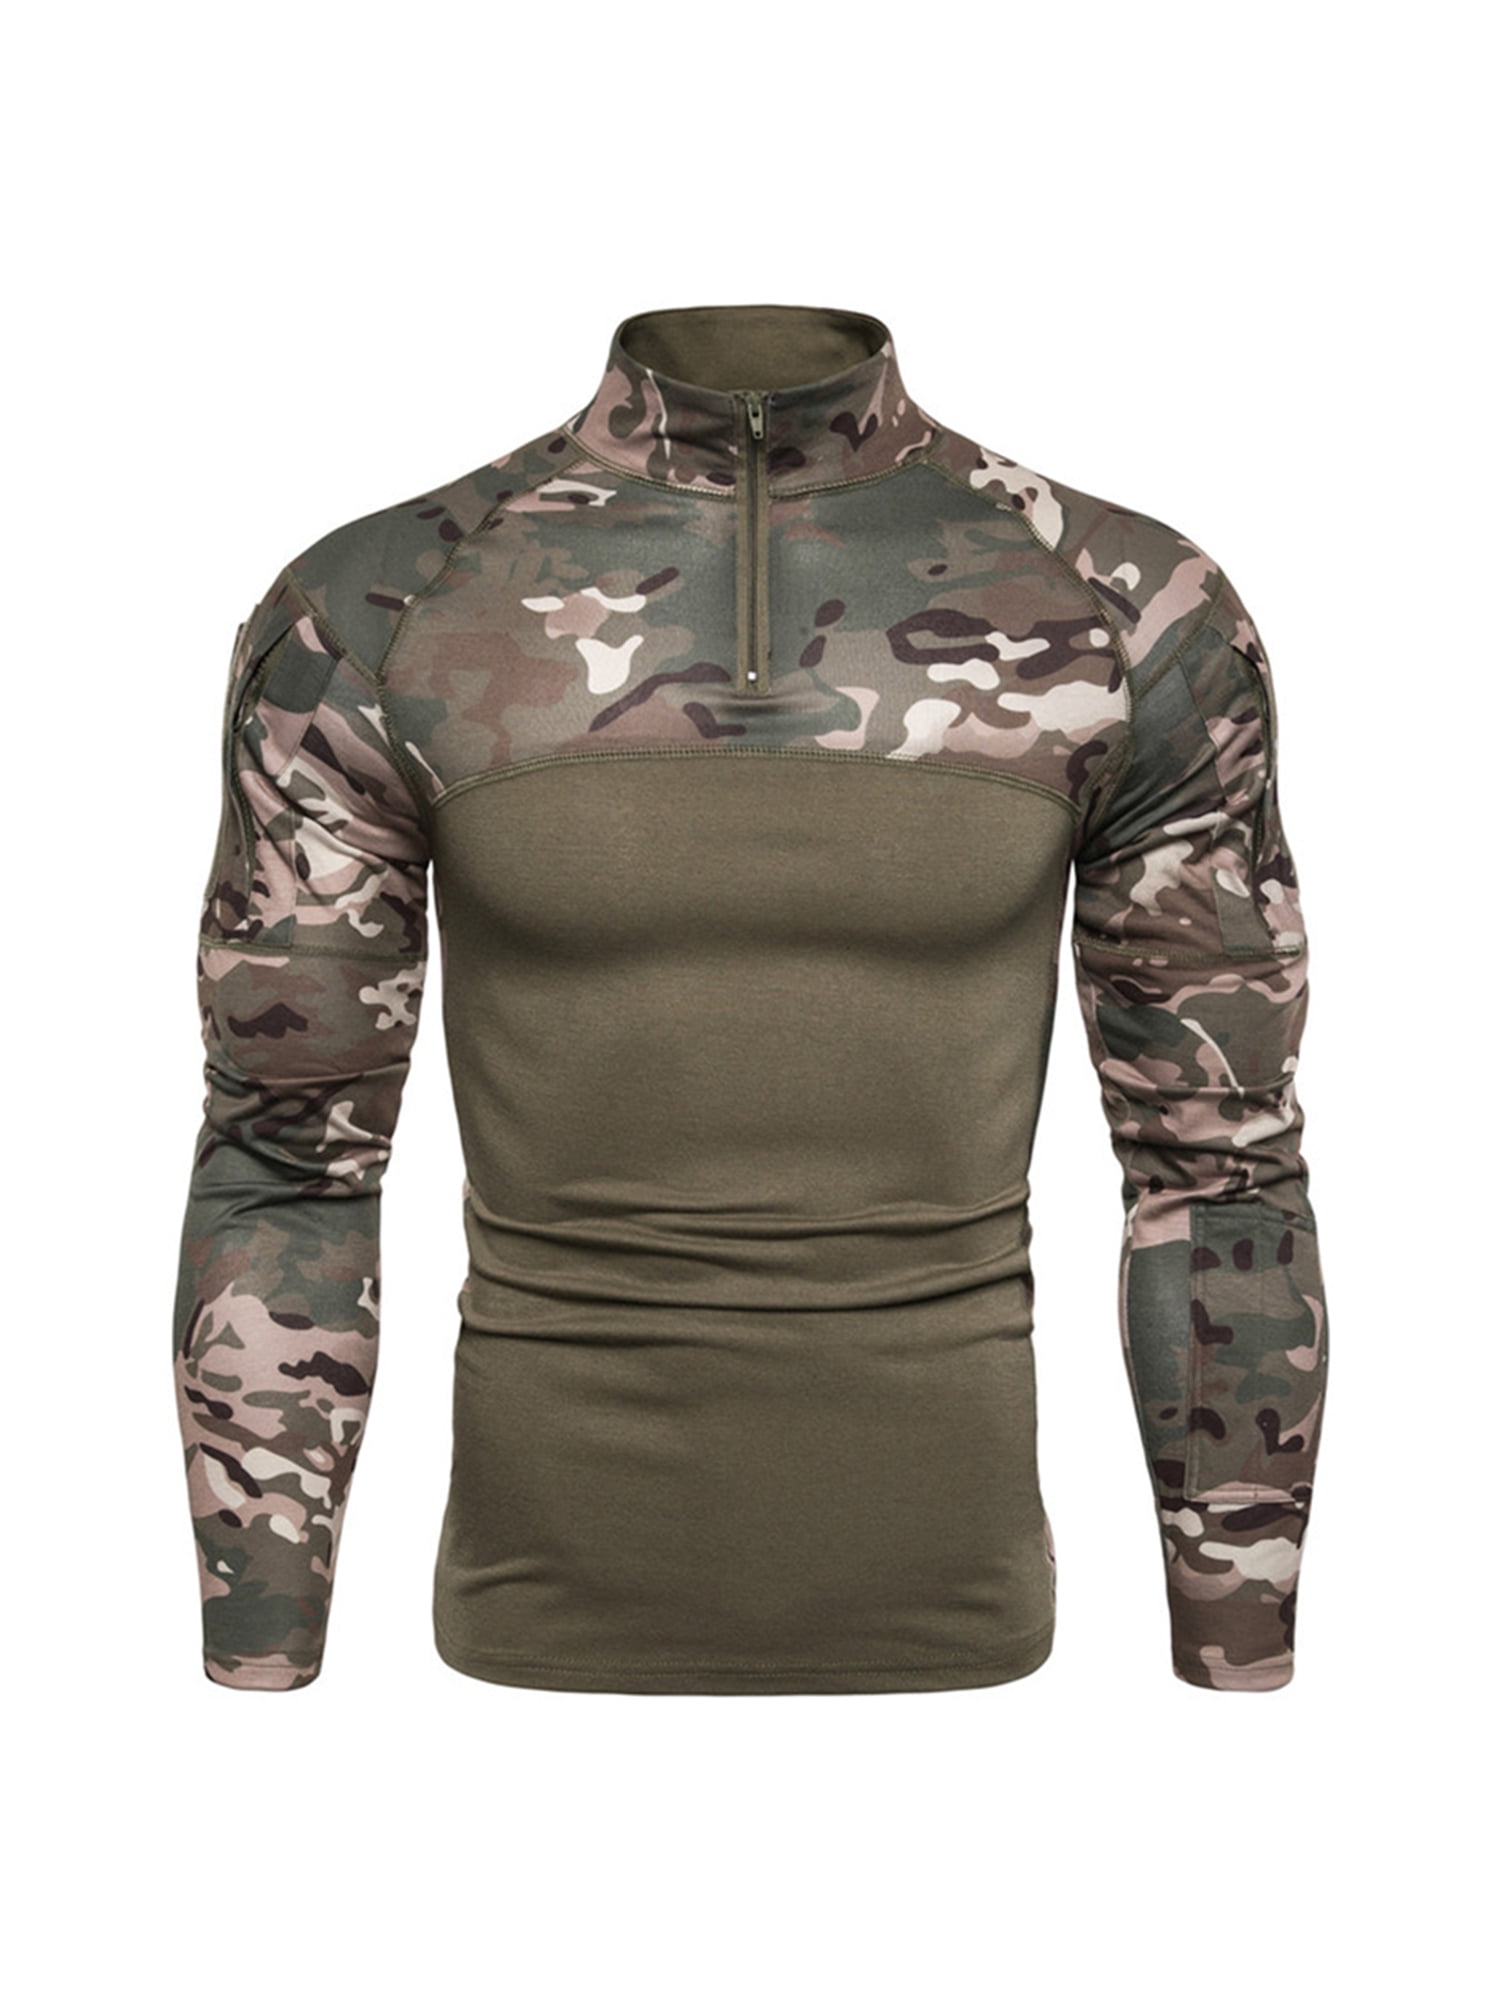 Men's Assault Military Tactical Combat Shirts Long Sleeve Outdoor Army T Shirt 